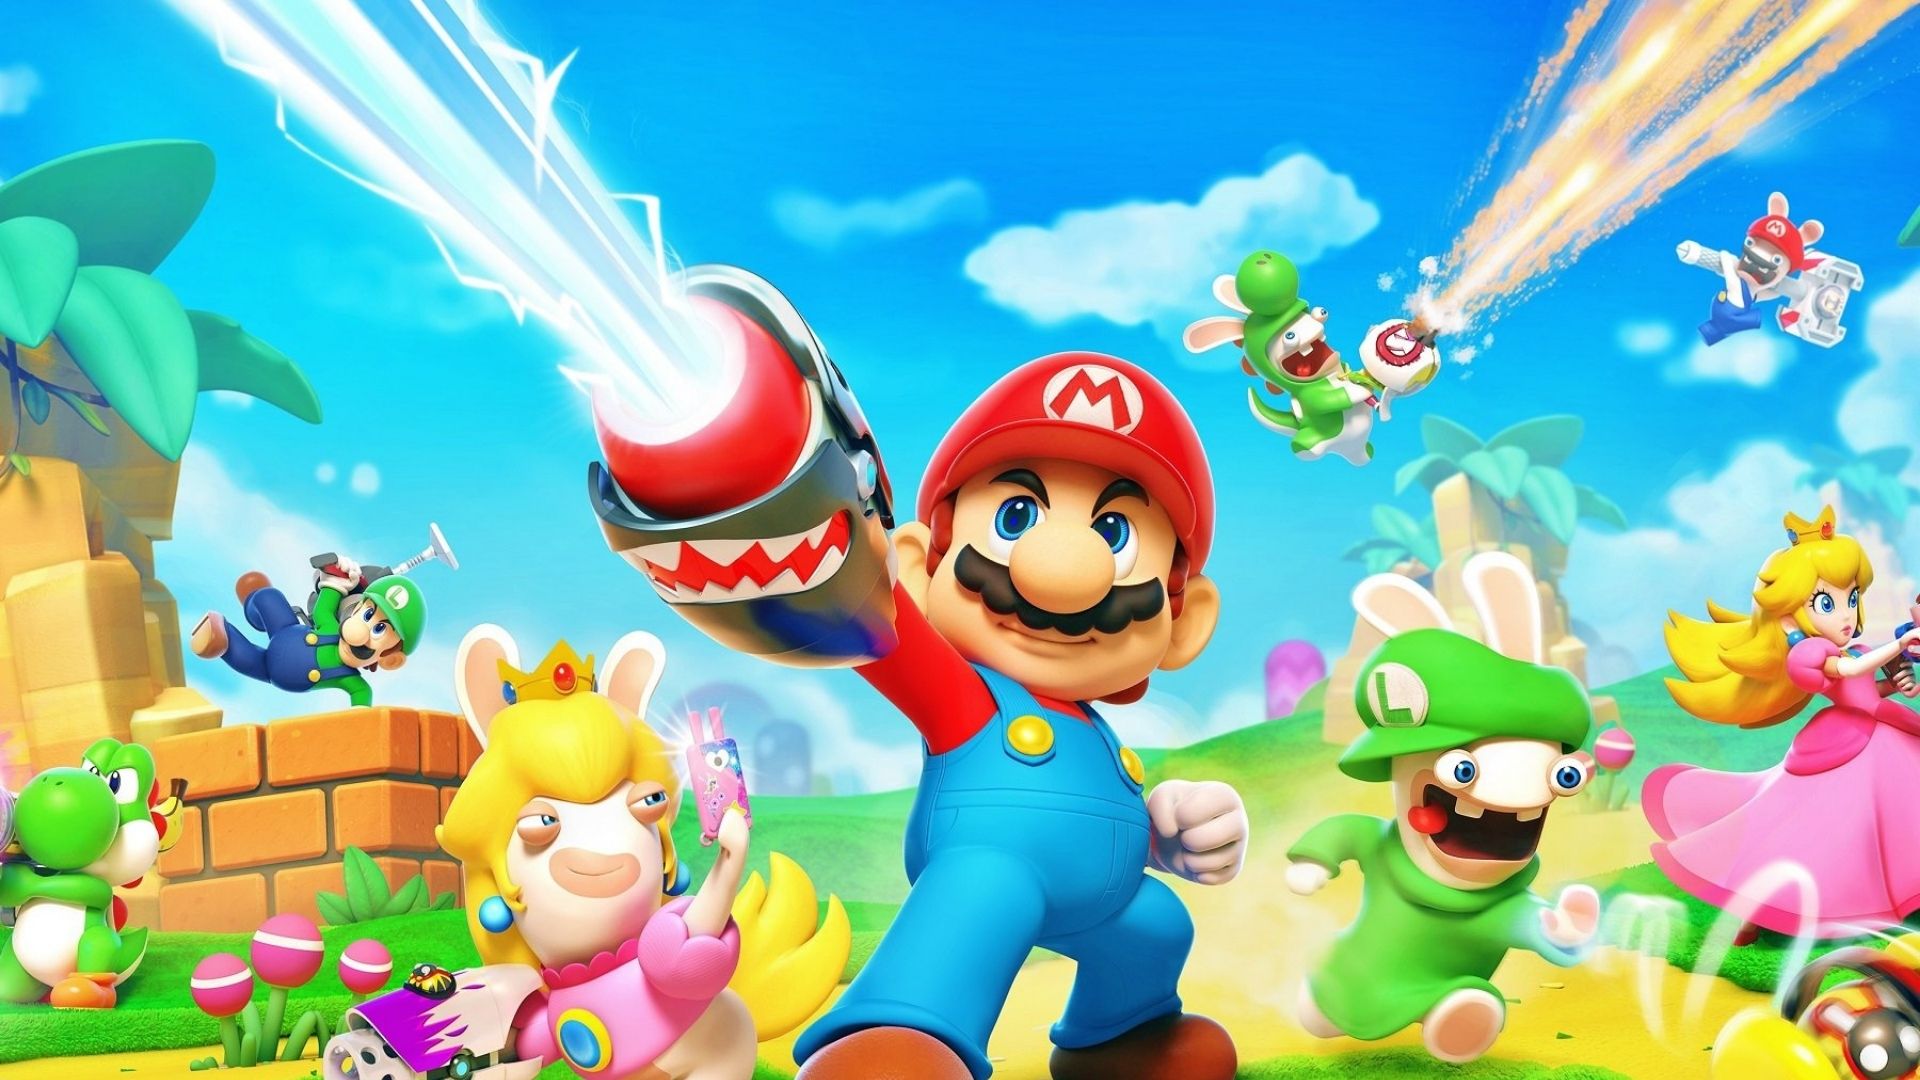 Mario, Luigi, Peach, Yoshi, and some Rabbits posing for the art of Mario + Rabbids Kingdom Battle.